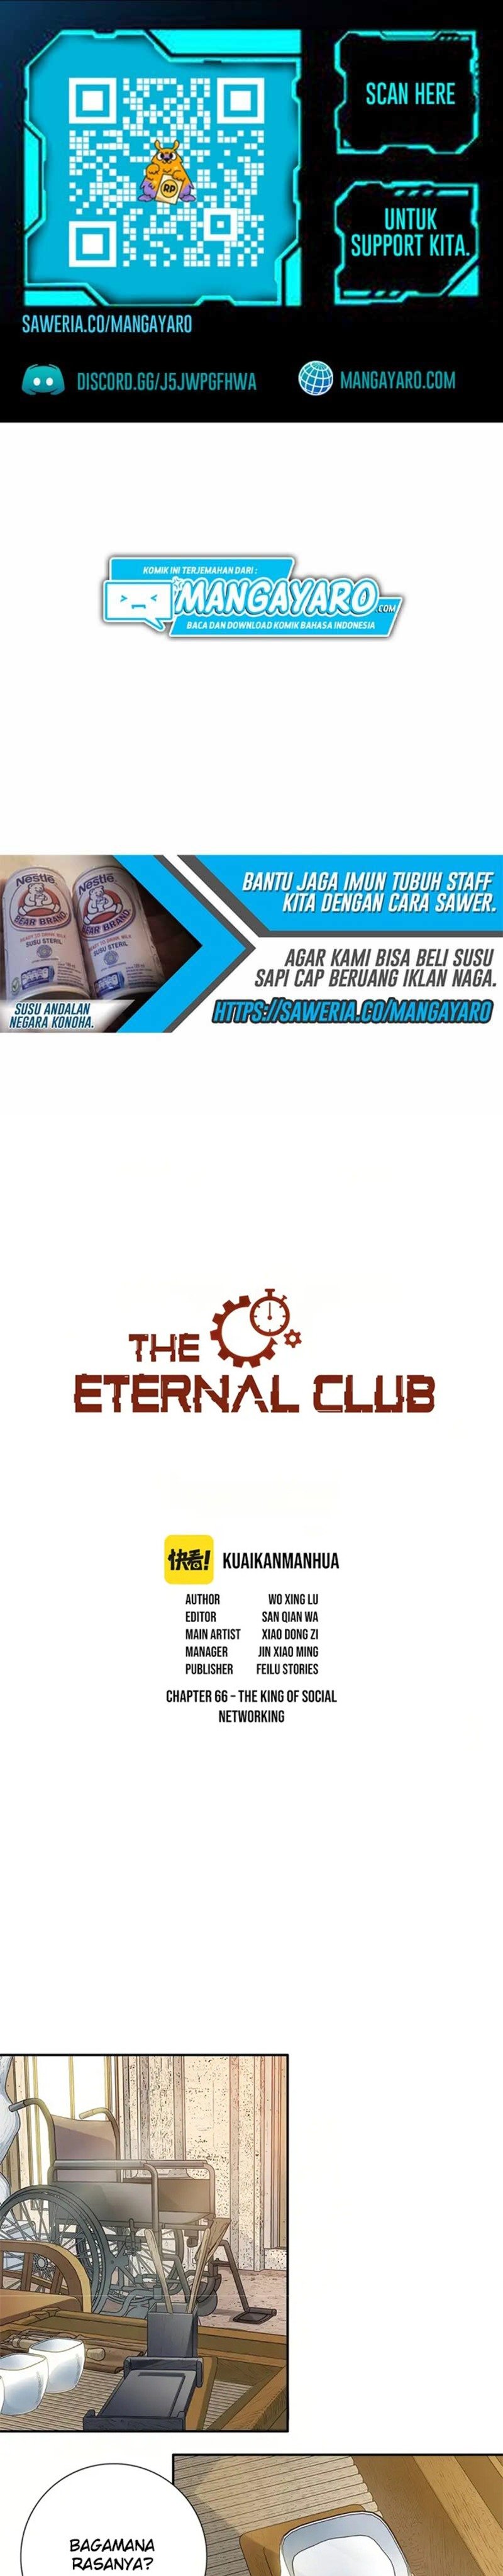 Eternal Club Chapter 66